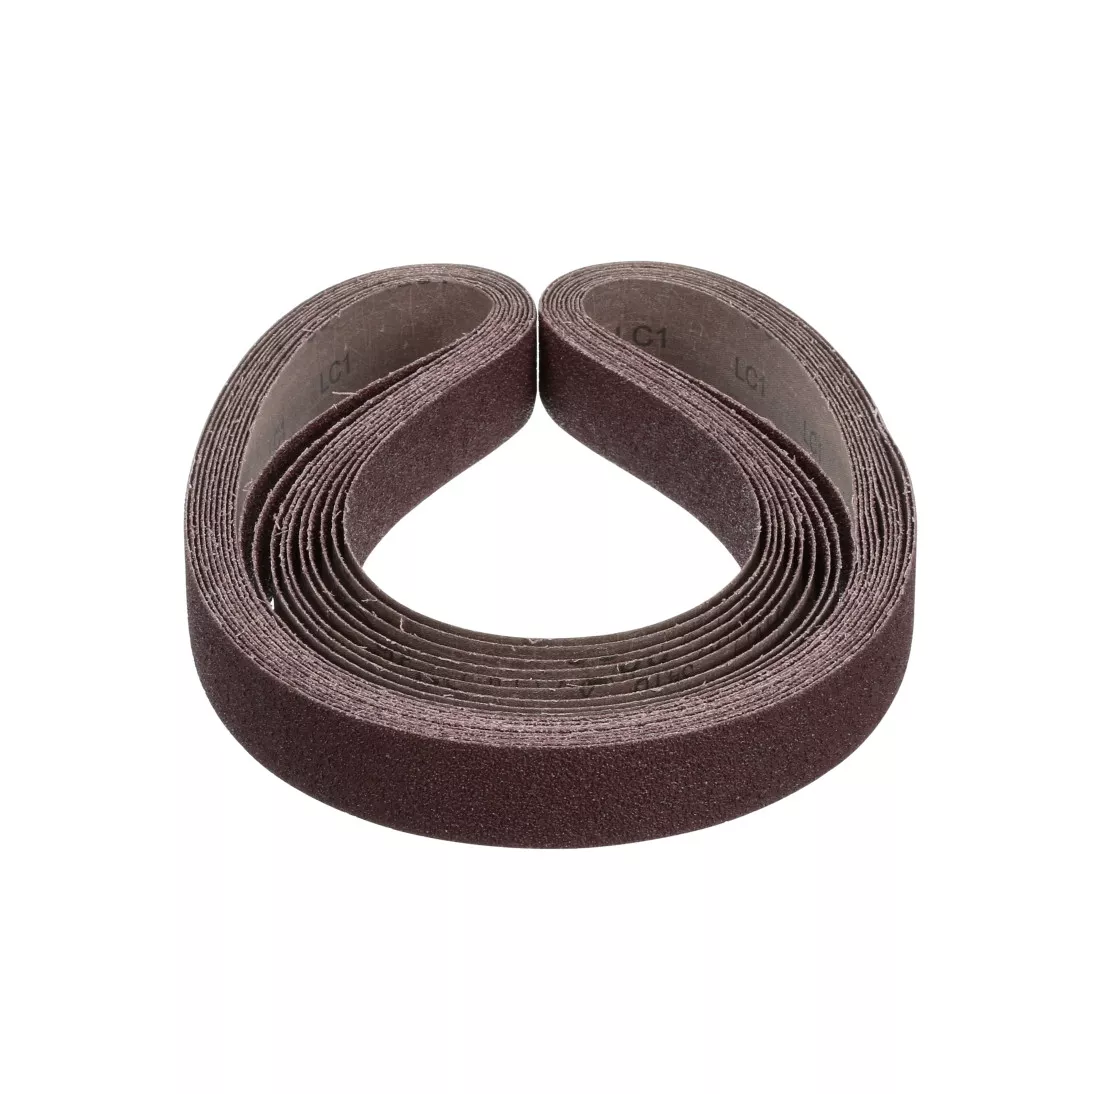 3M™ Cloth Belt 341D, P120 X-weight, 1 in x 42 in, Film-lok, Single-flex,
200 ea/Case